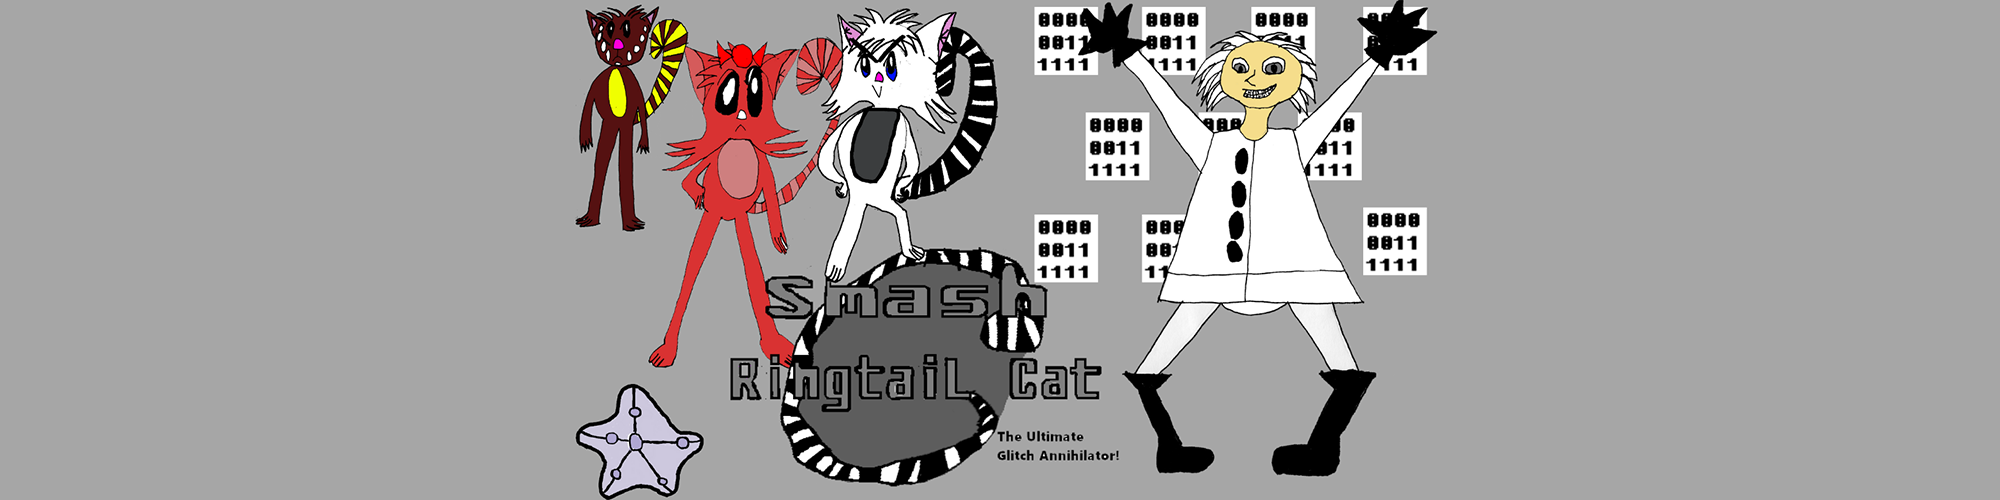 Smash Ringtail Cat: The Ultimate Glitch Annihilator